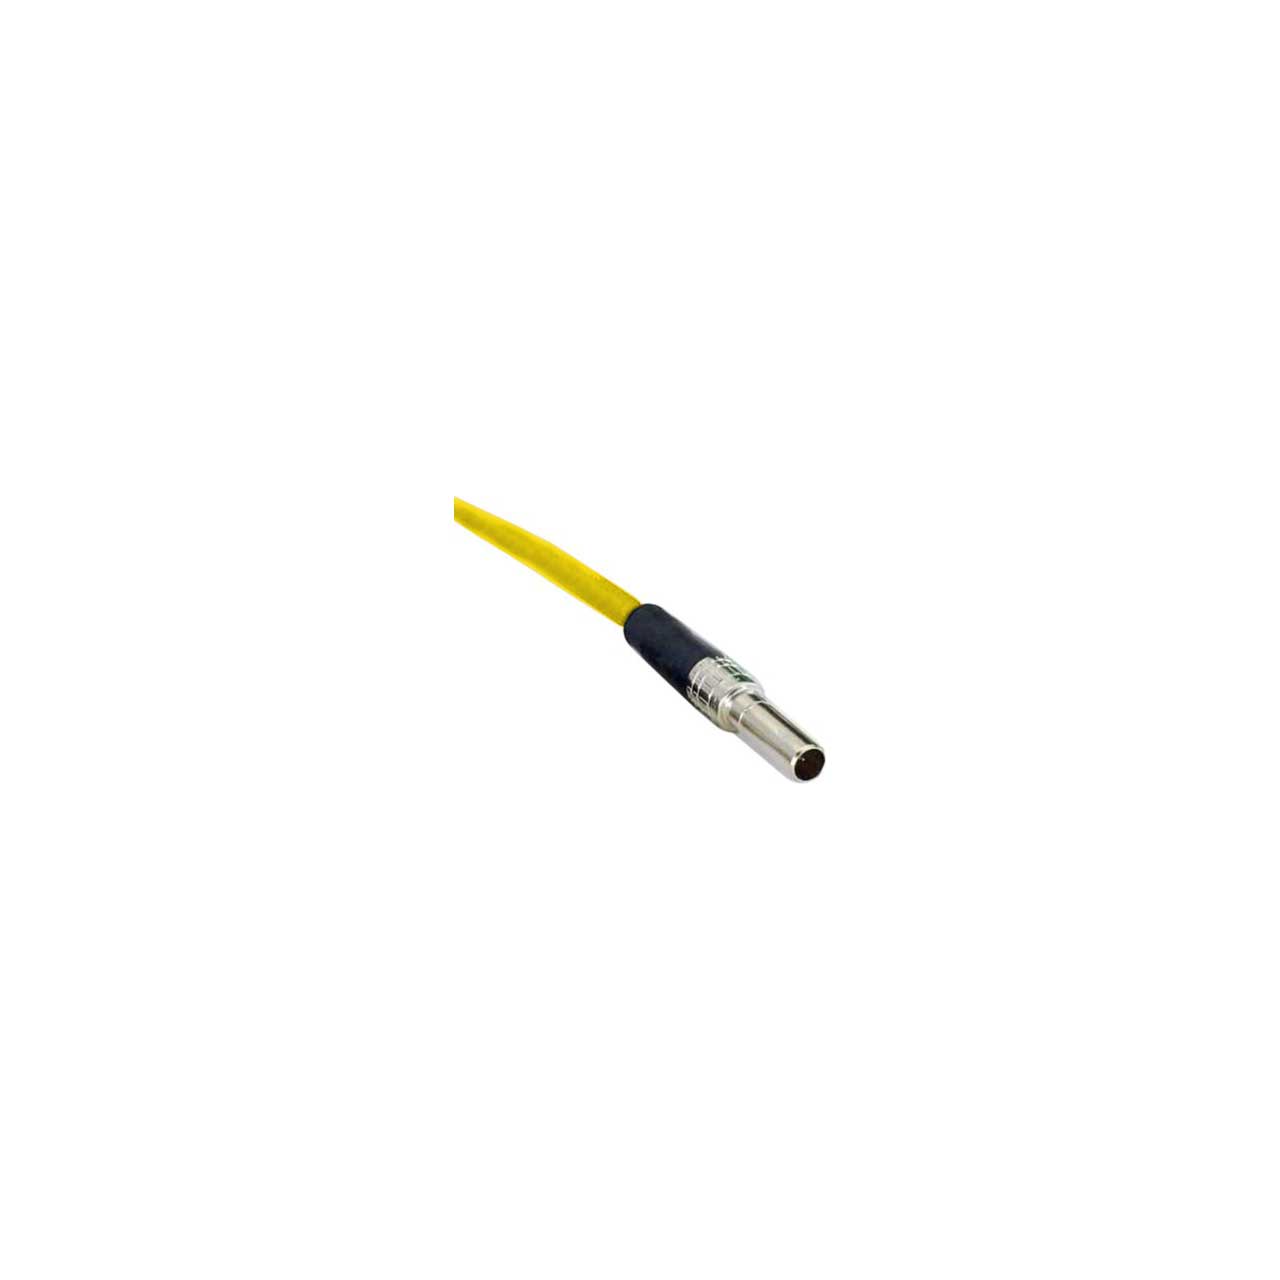 AVP MPC-15-Yellow Midsize 3G HD-SDI Video Patchcord - Yellow - 1.5 Foot MPC-15-YELLOW